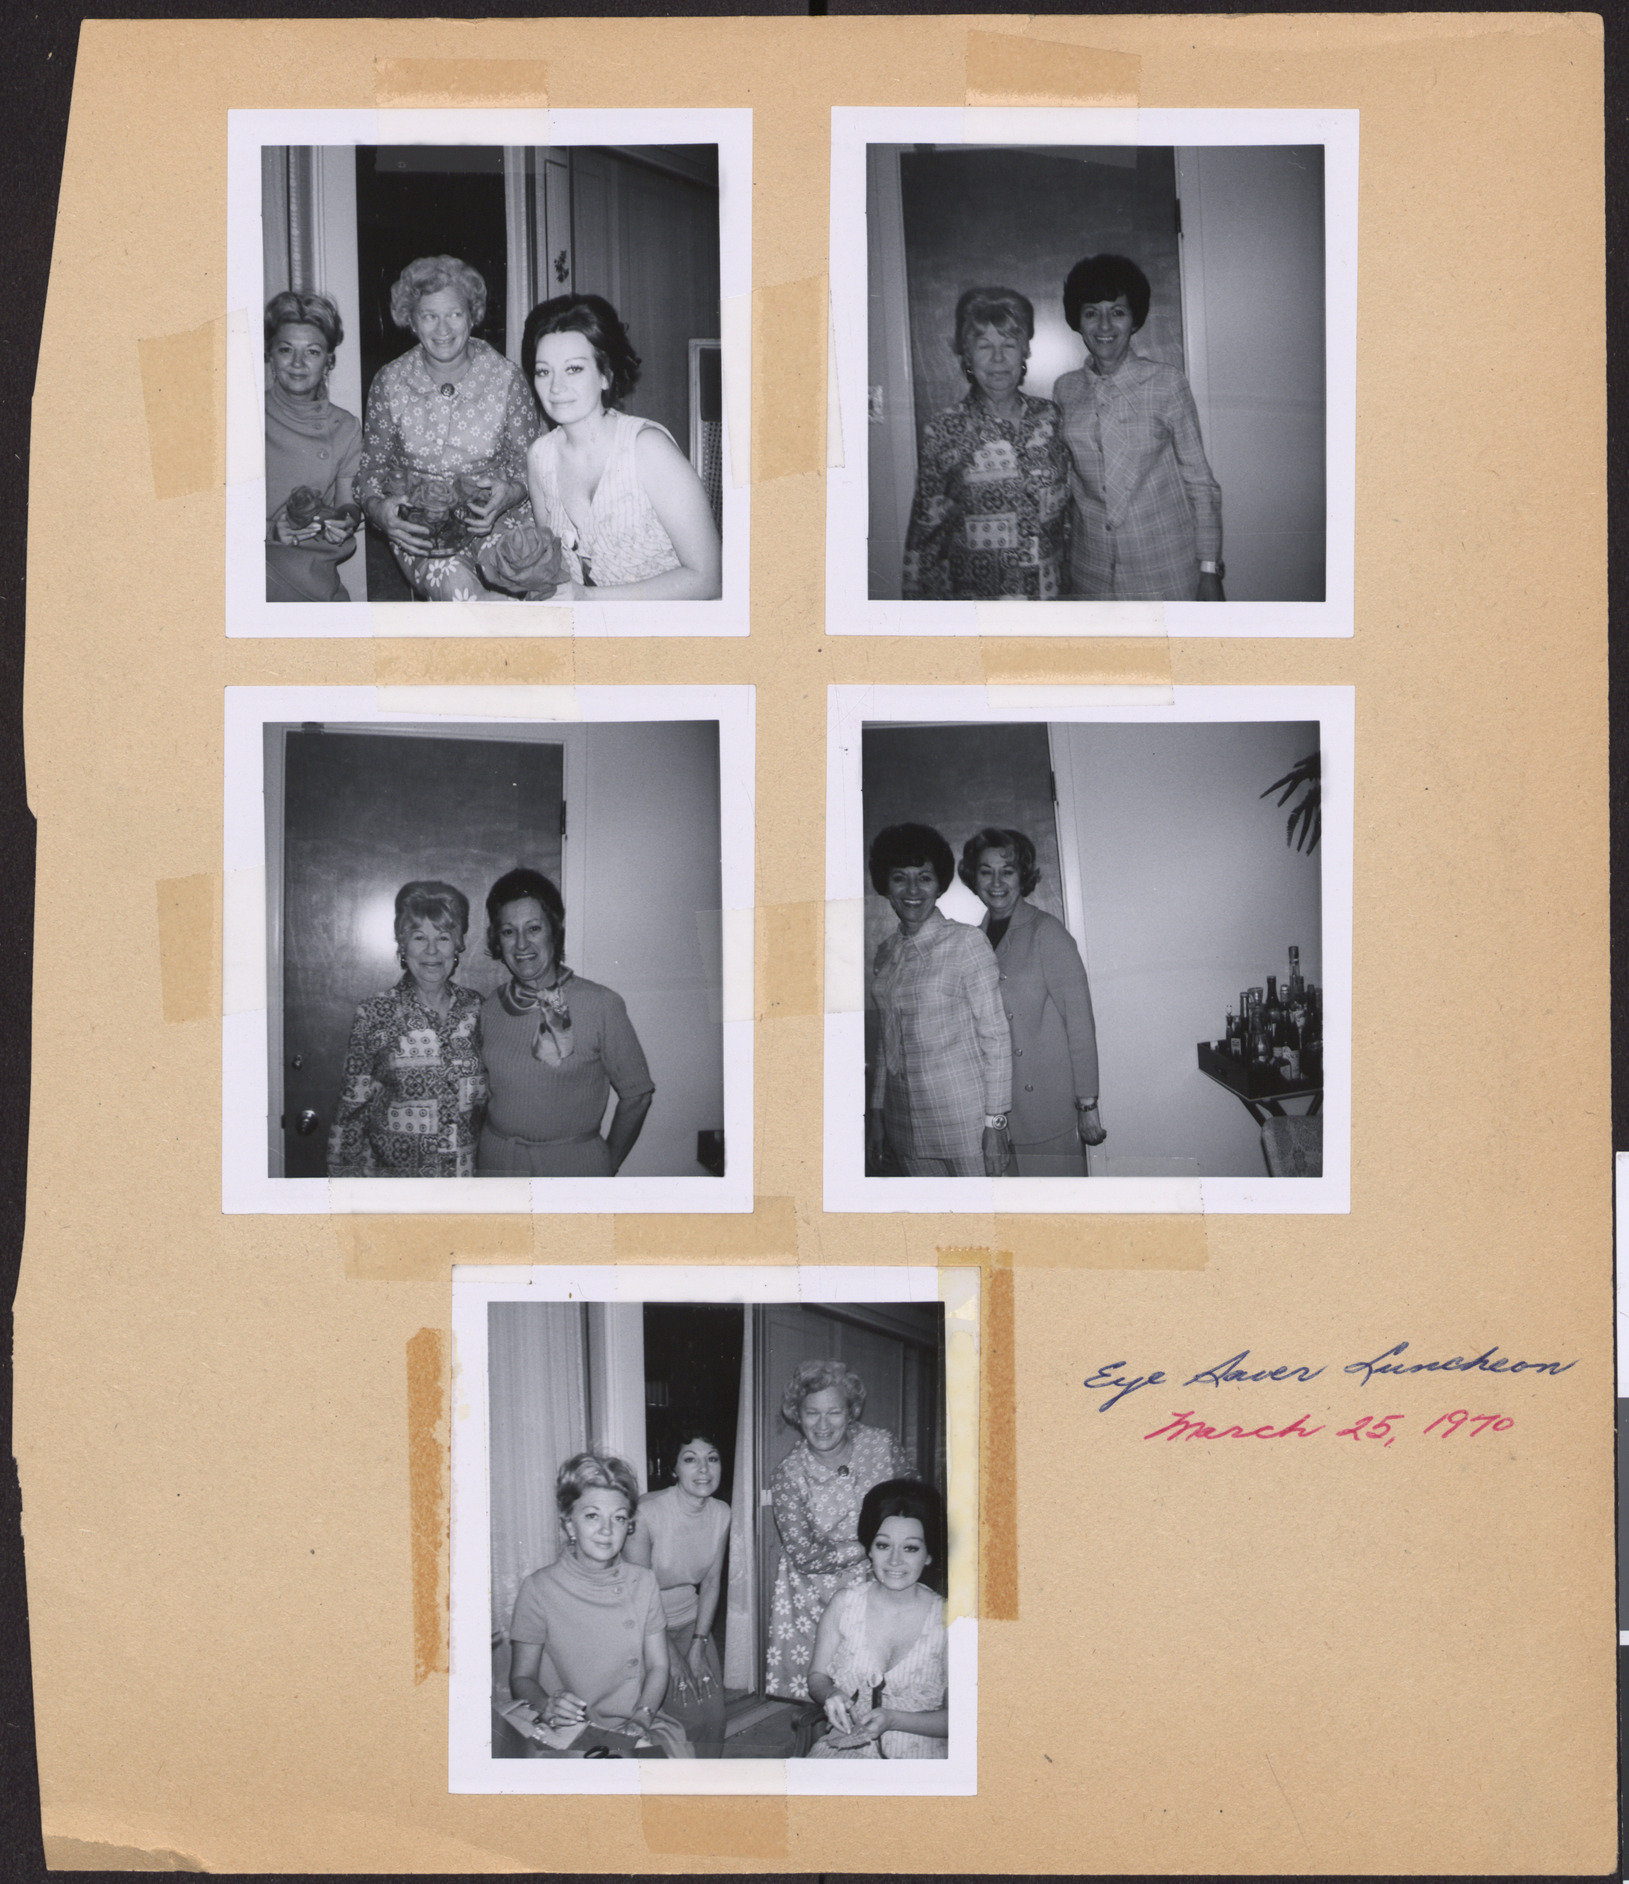 Photographs of Hadassah Eye Saver Luncheon, March 25, 1970